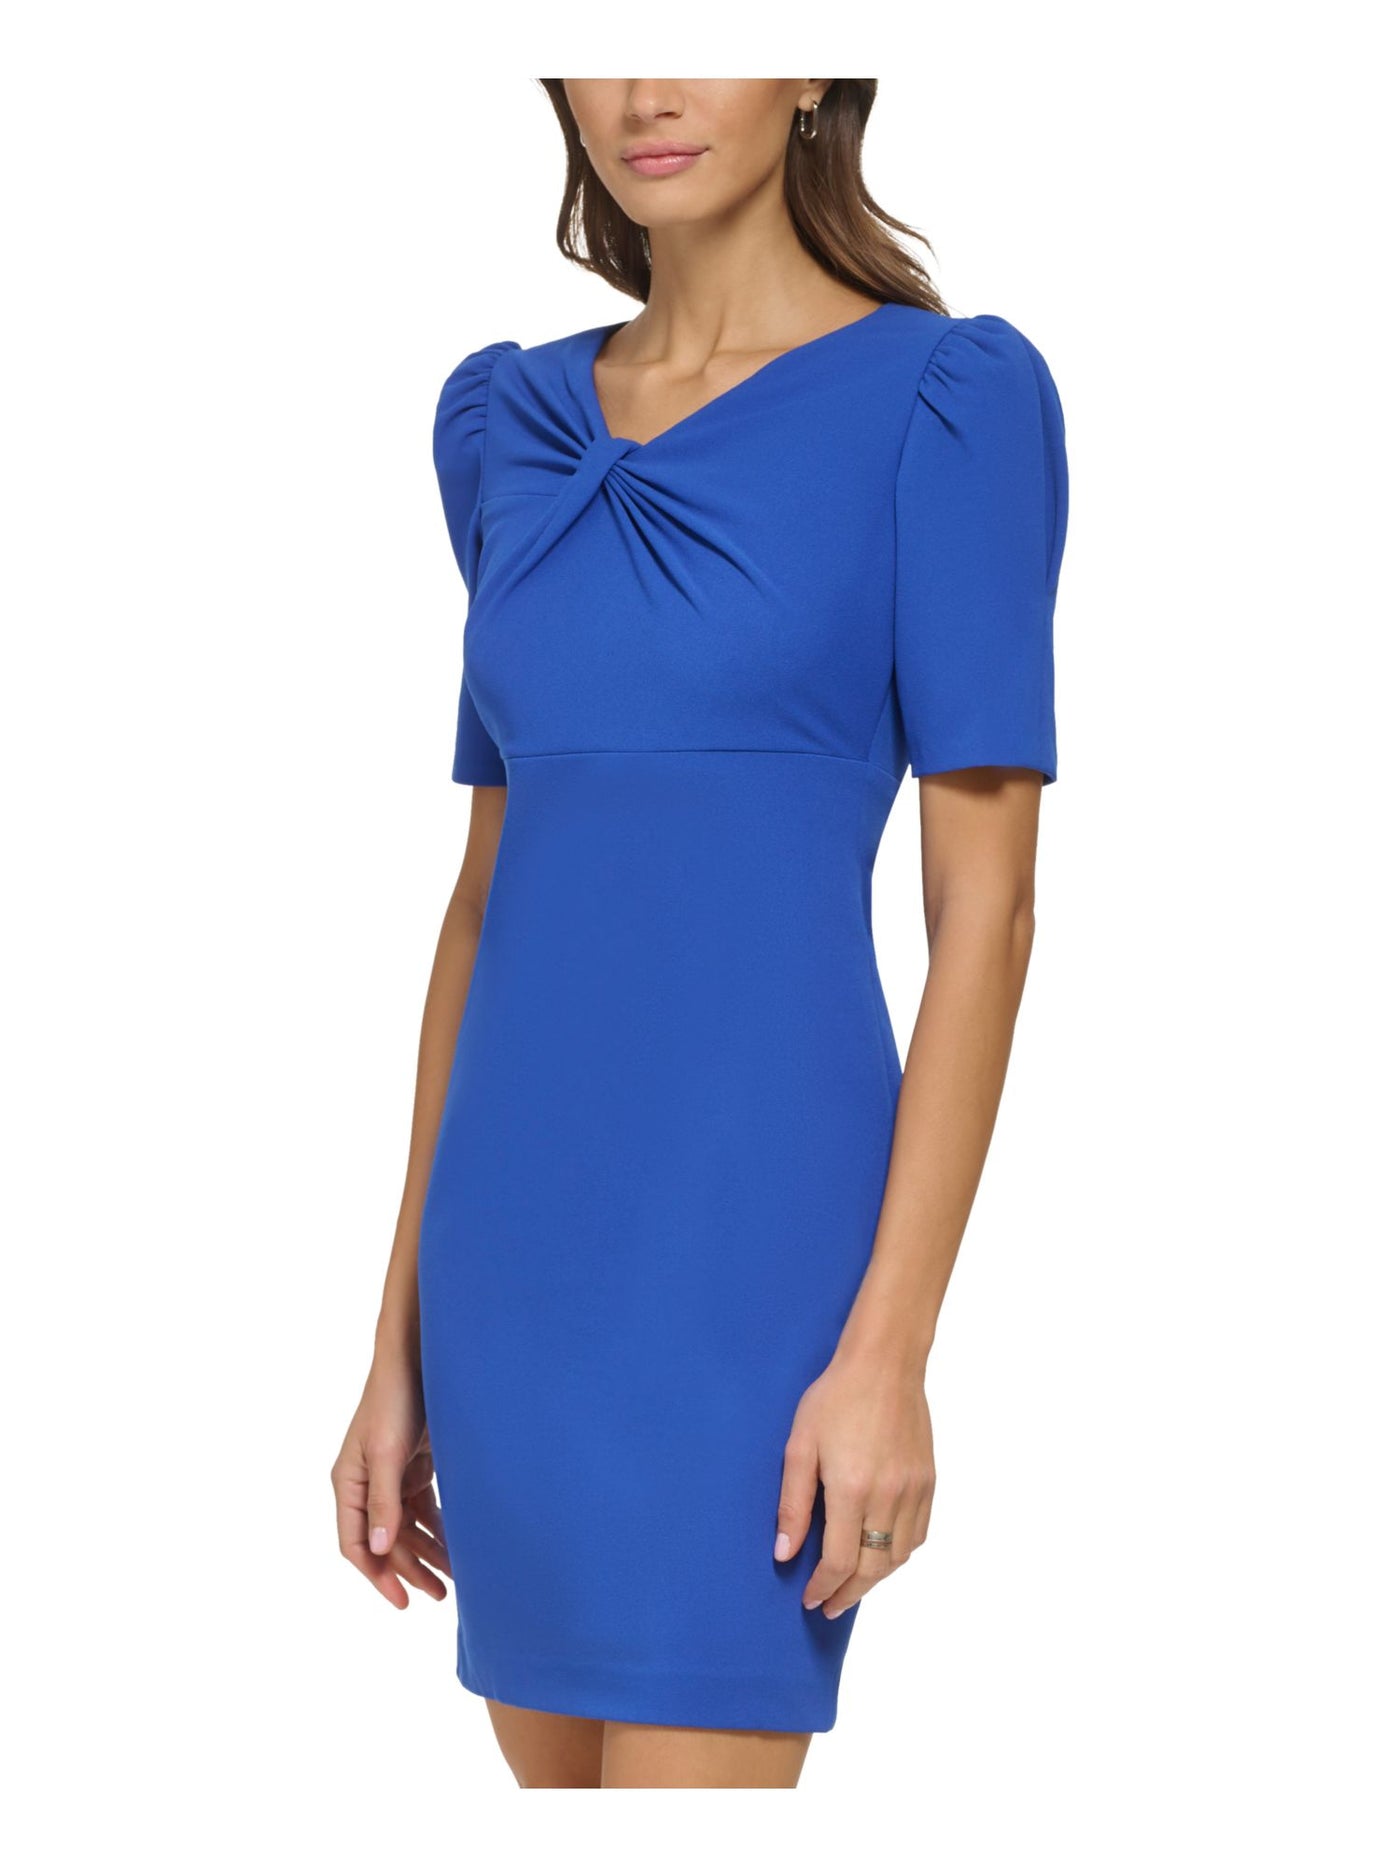 DKNY Womens Blue Unlined Zippered Pouf Sleeve V Neck Above The Knee Wear To Work Sheath Dress Petites 12P